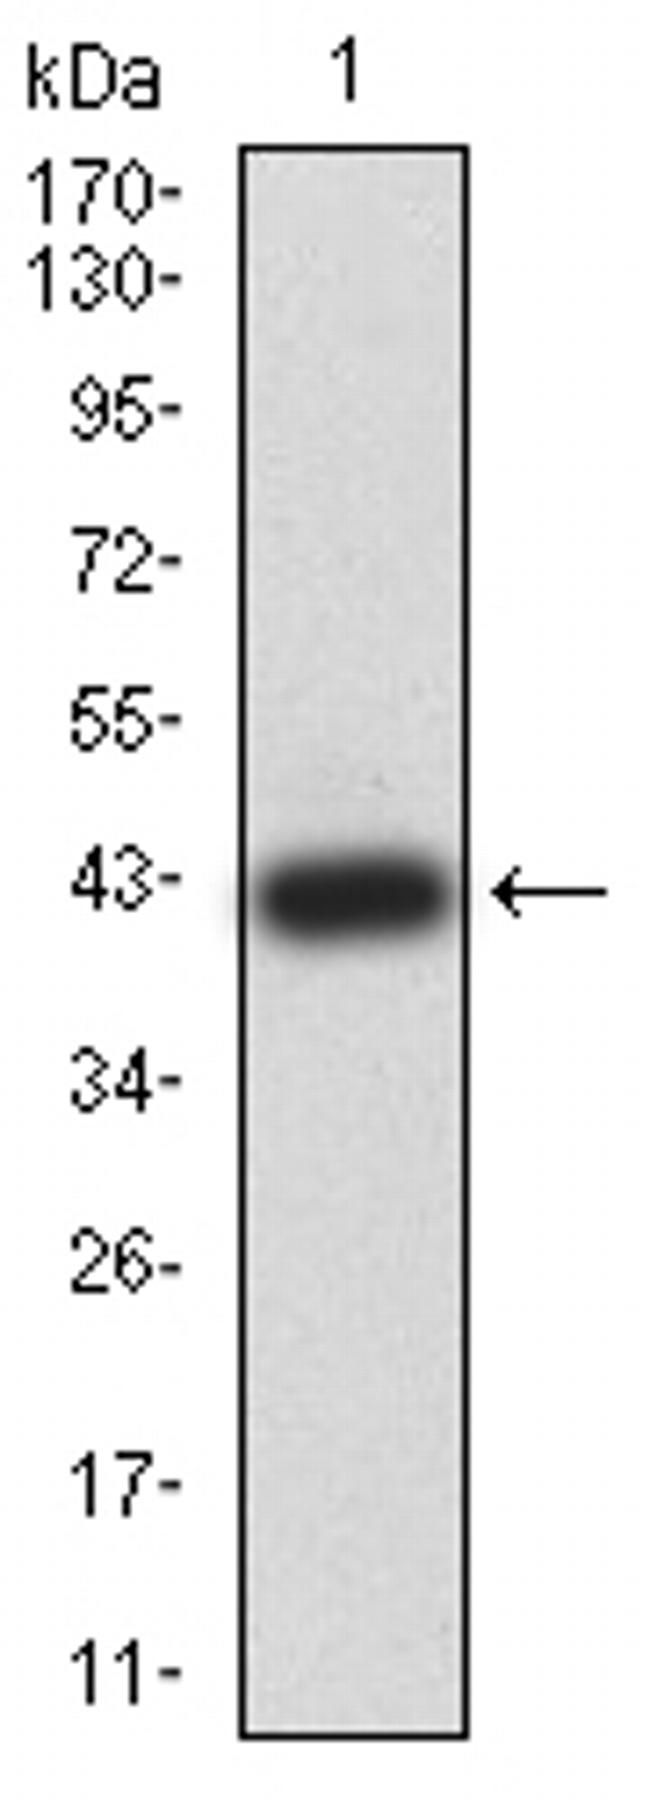 JMJD2B Antibody in Western Blot (WB)